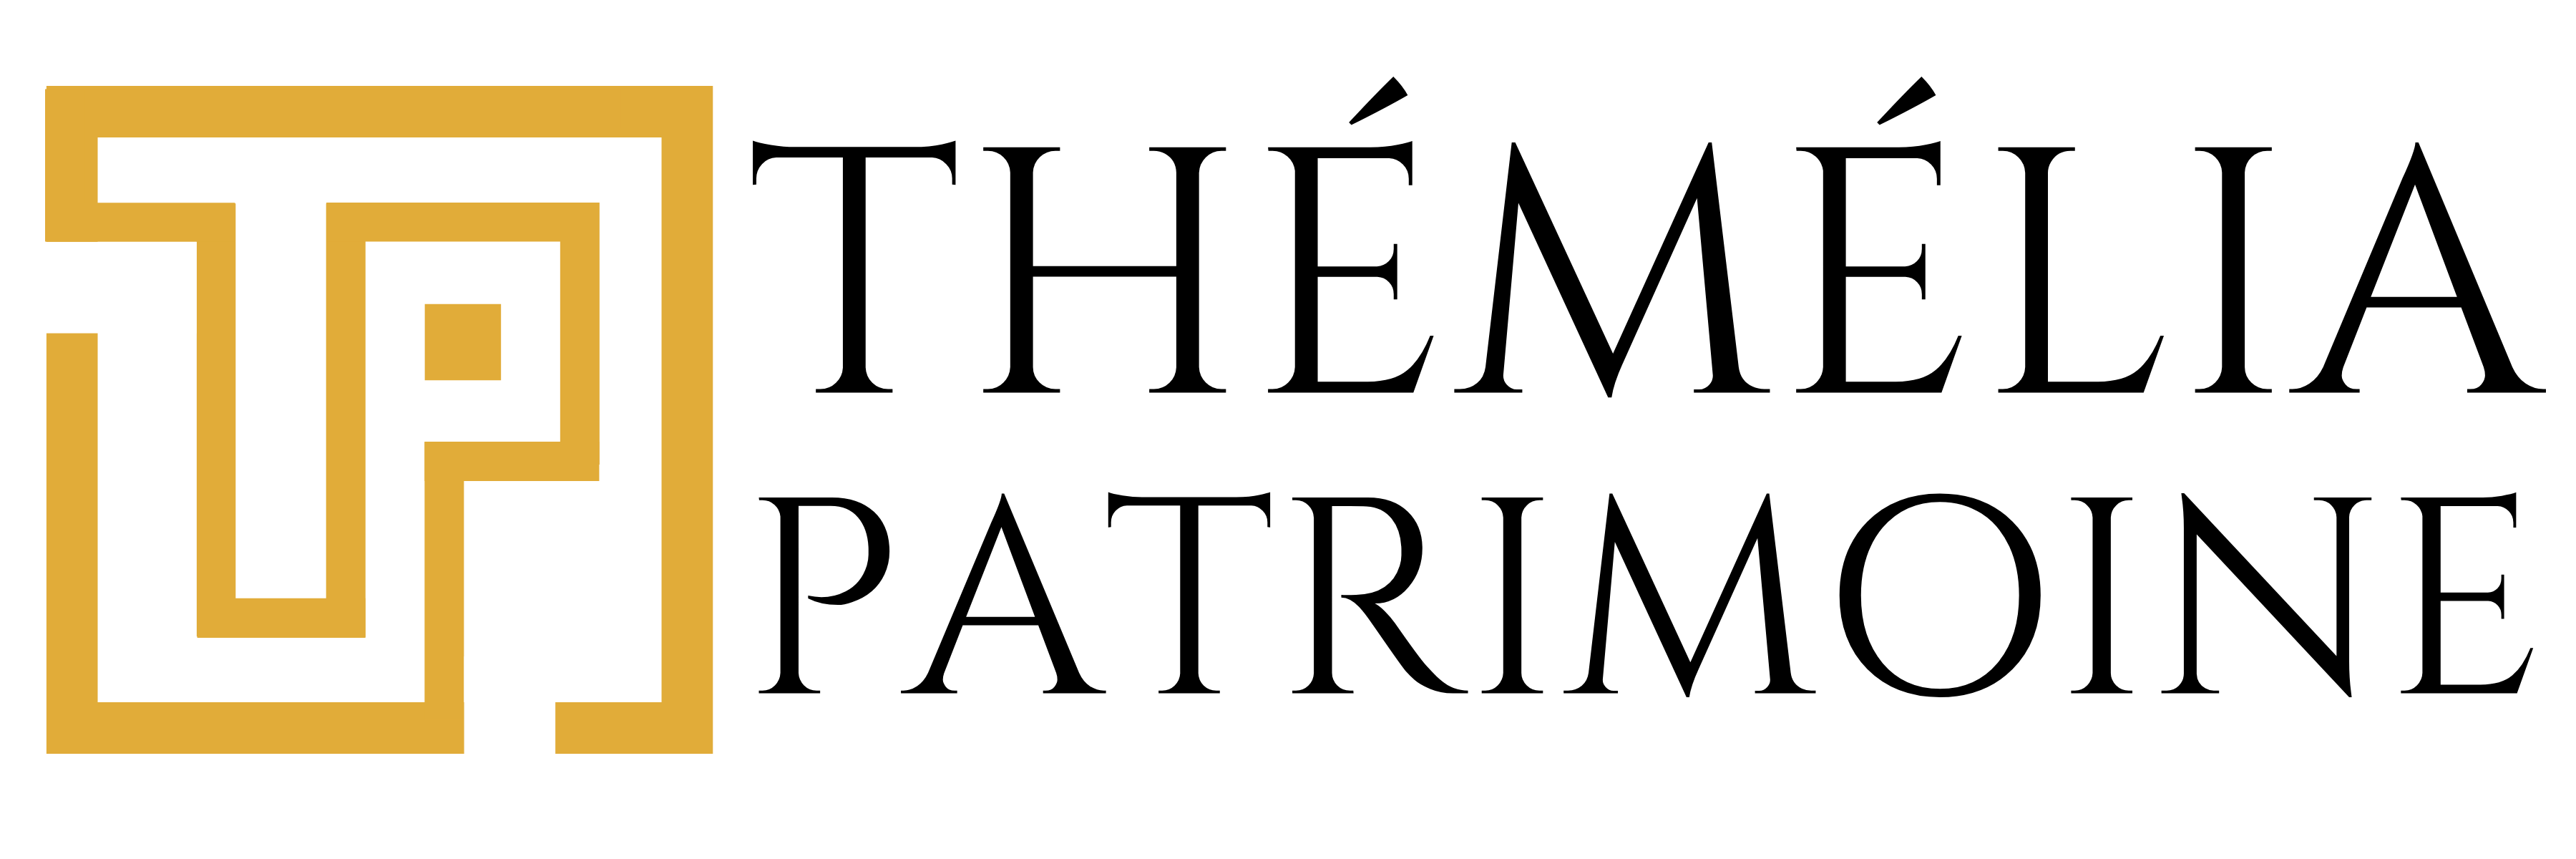 logo Thémélia patrimoine